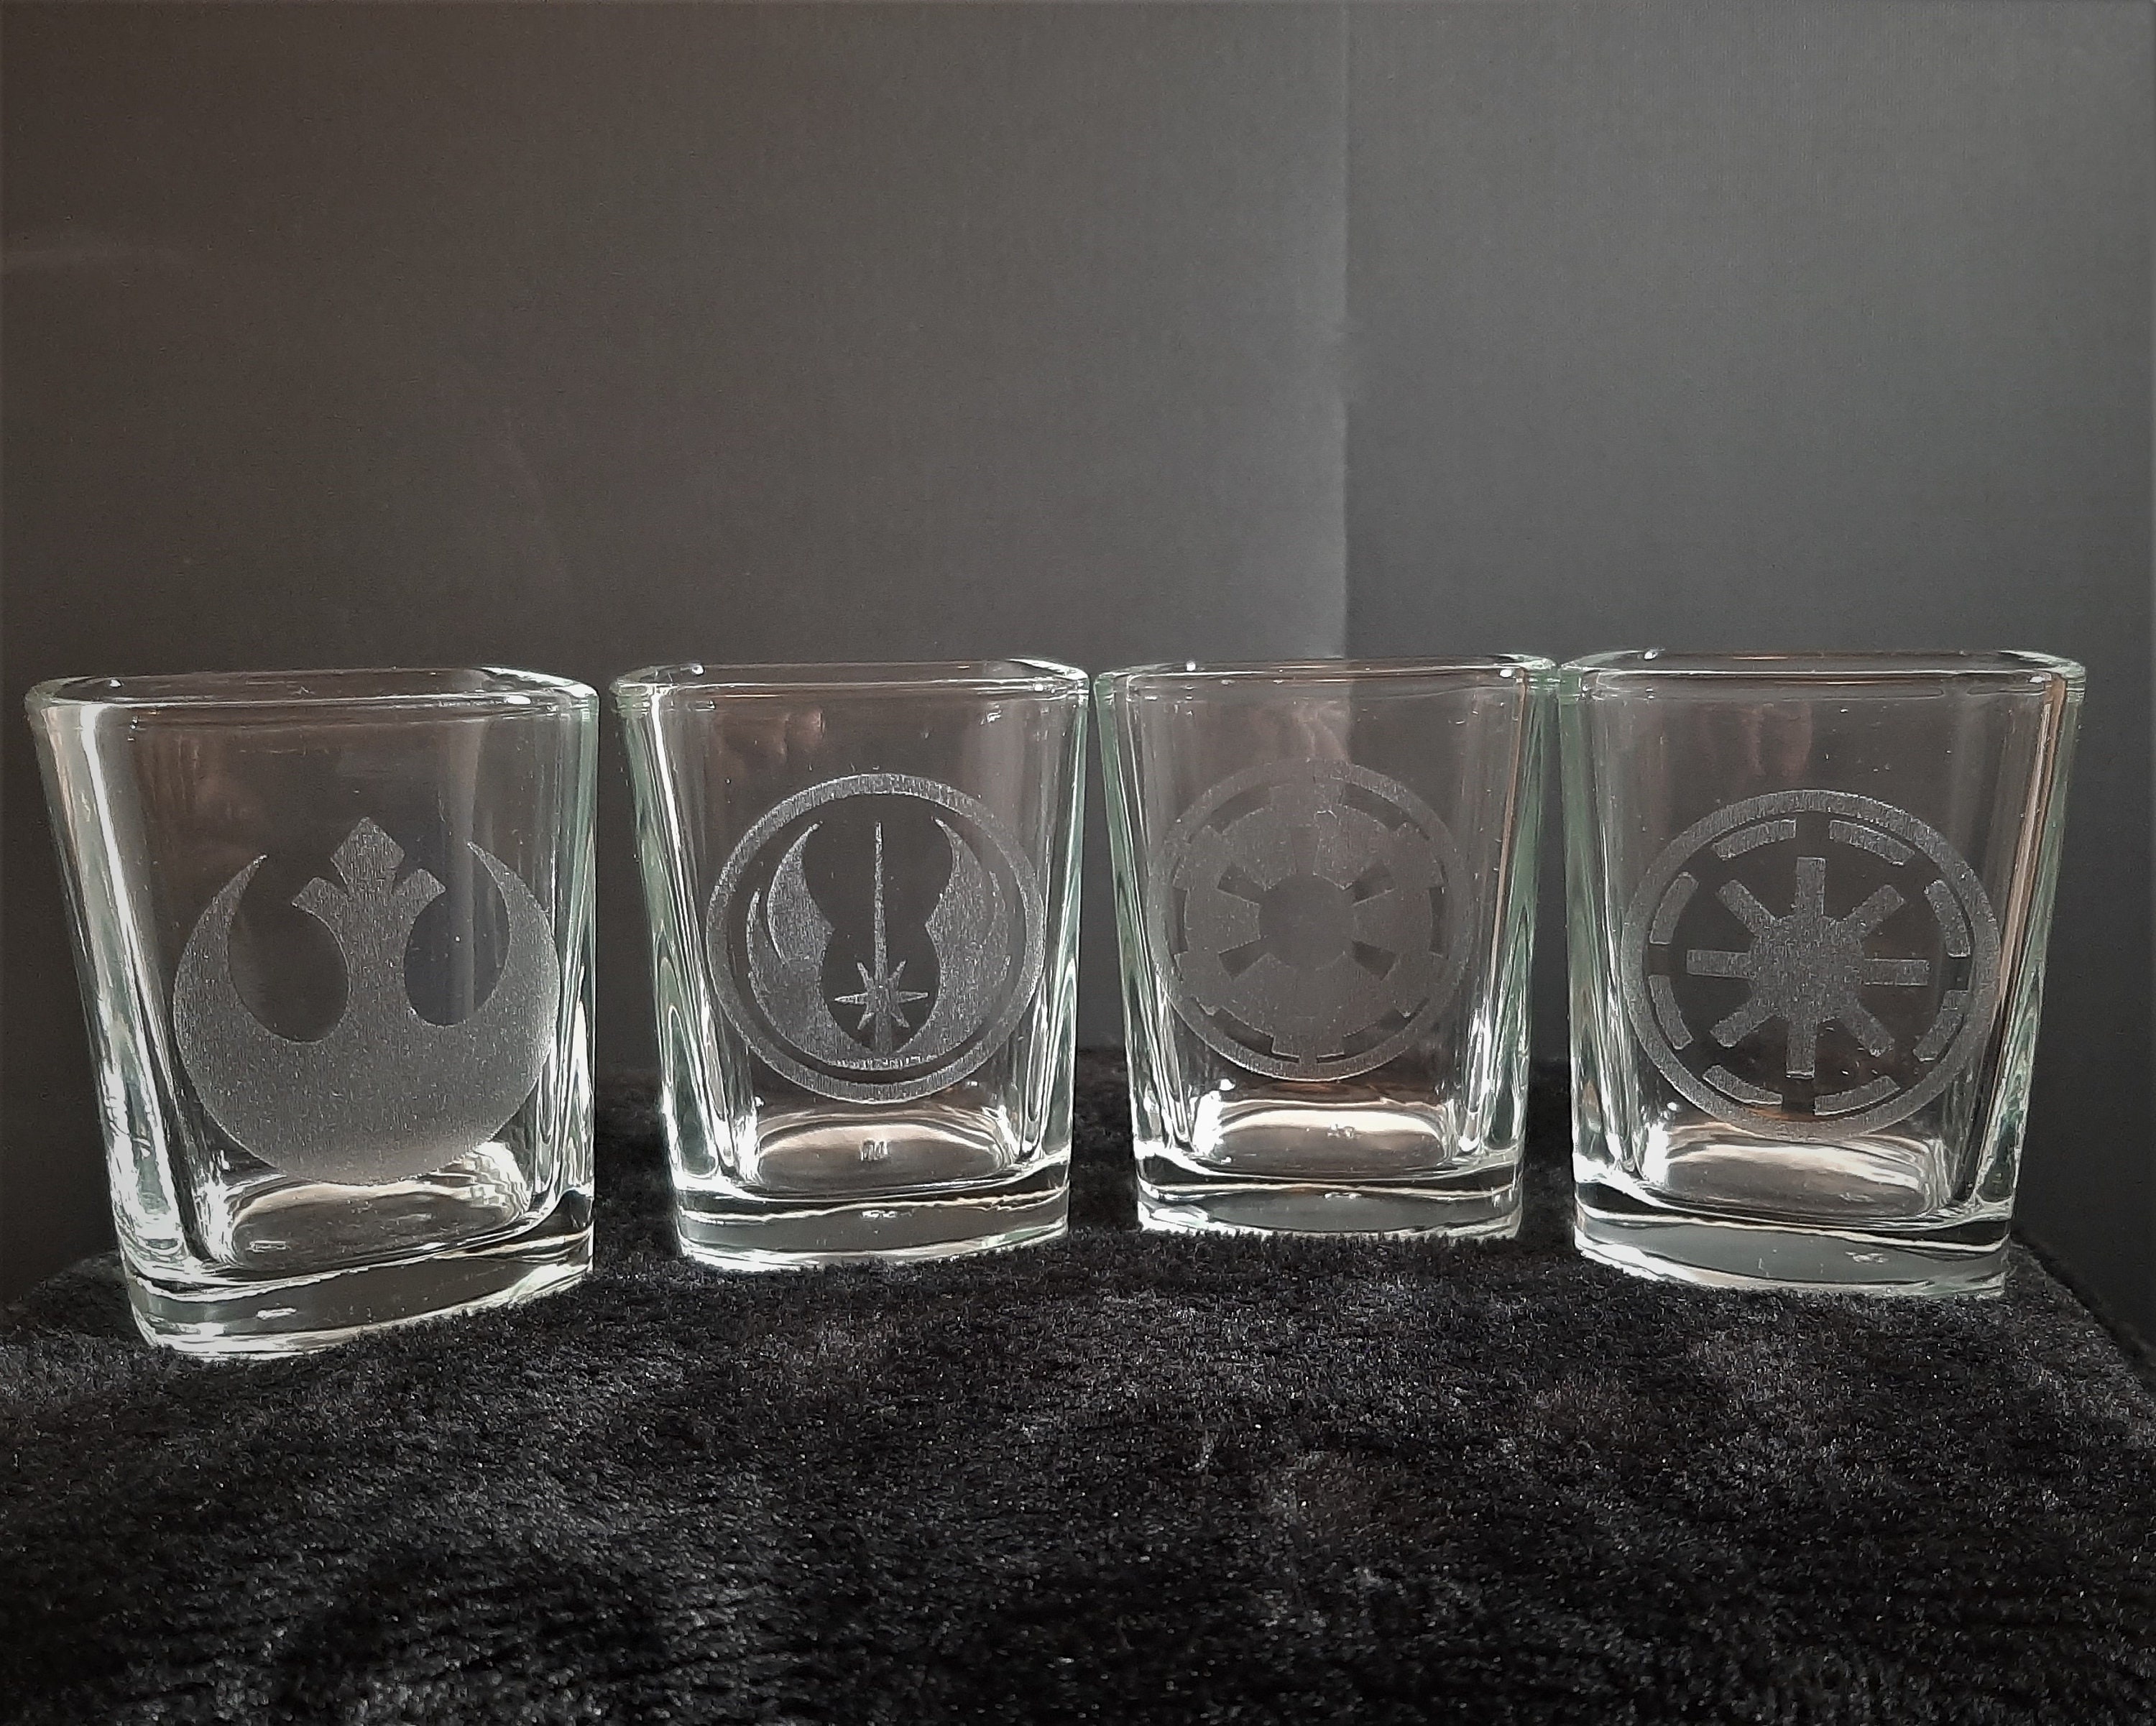 Star Wars Shot Glasses Set of Four: Mandalorian, Jedi Order, Rebel